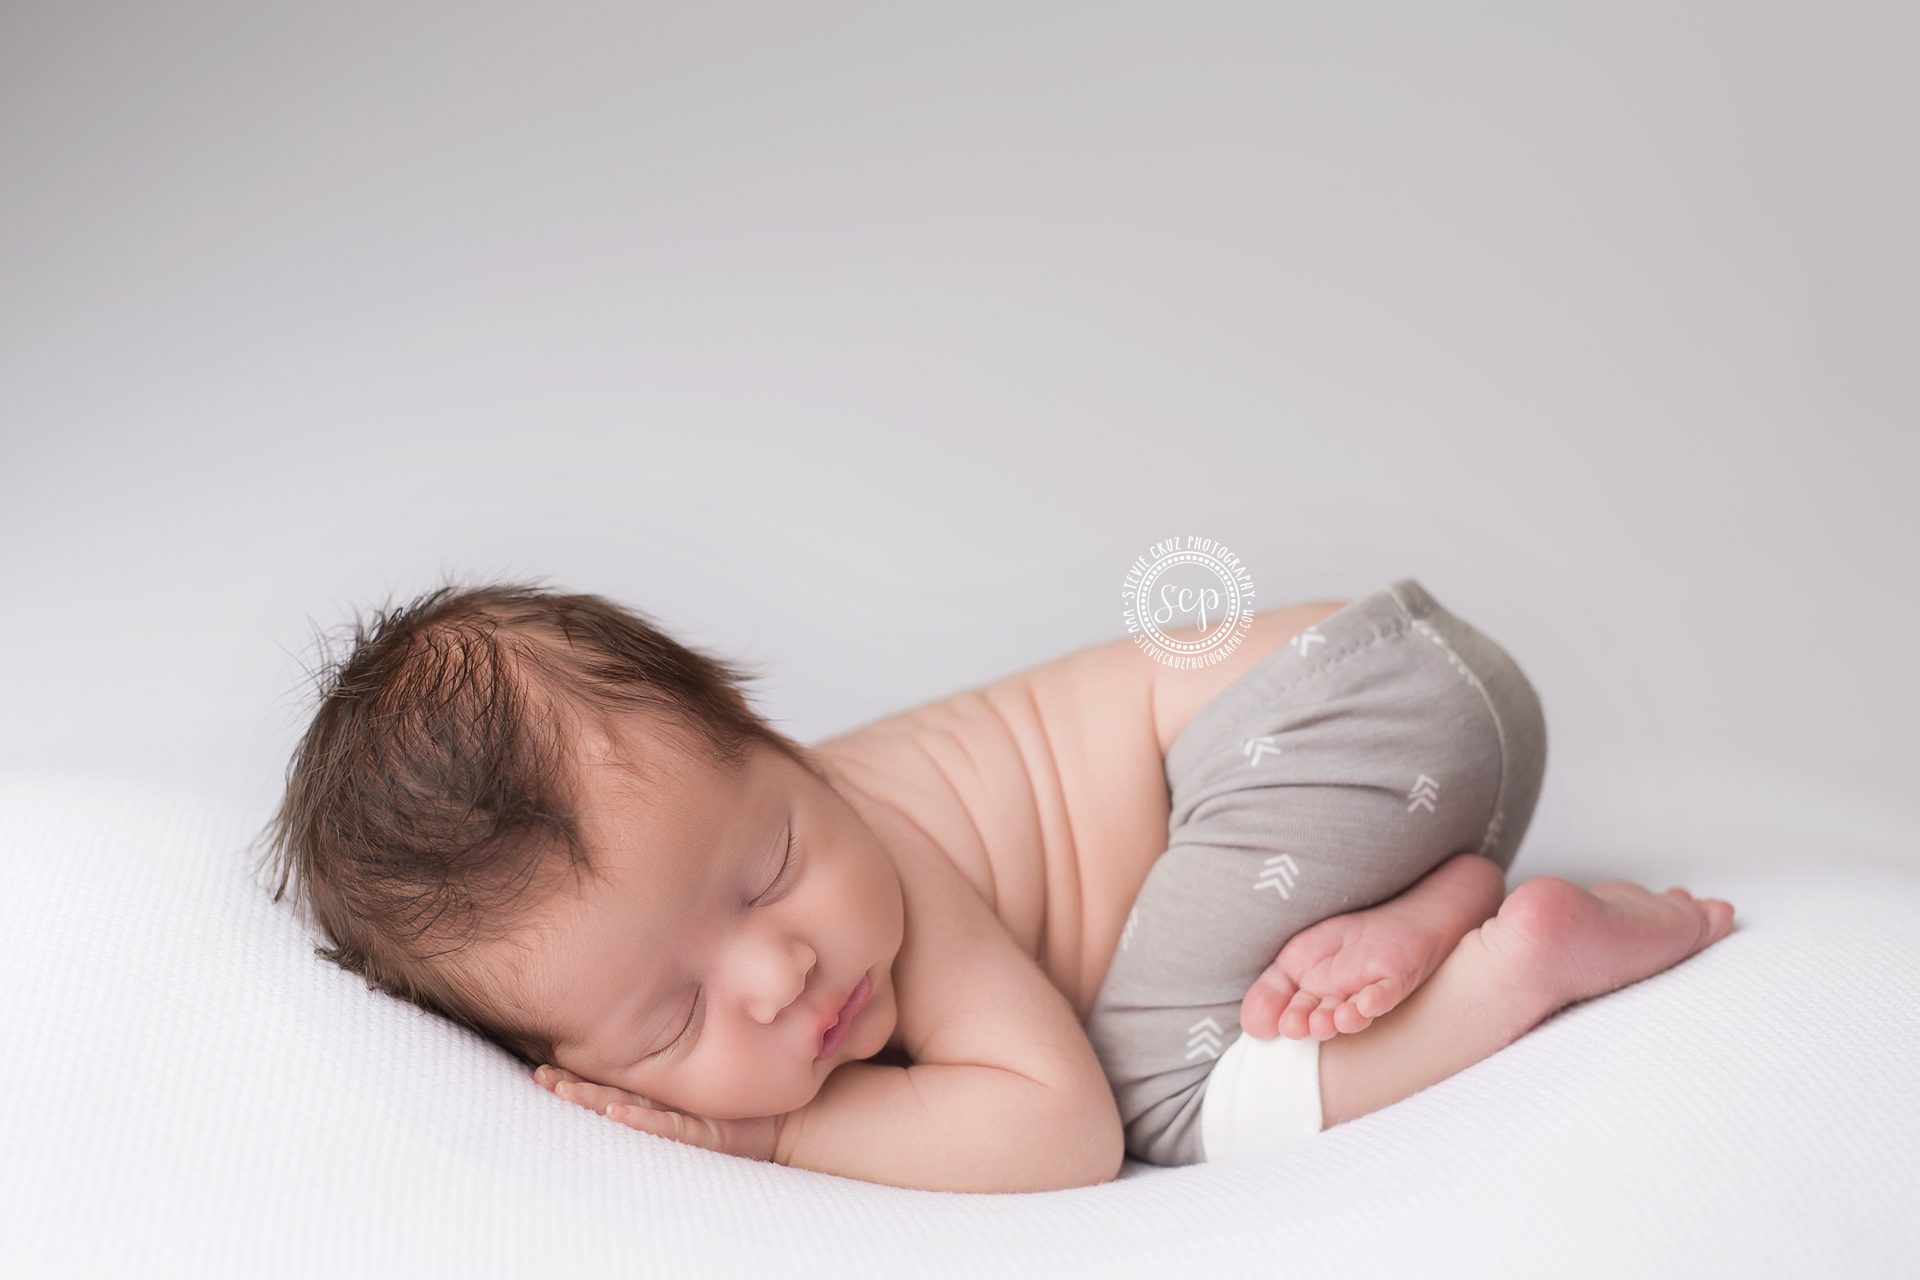 Cute outfits ideas for newborn baby boys . OC newborn photo studio 